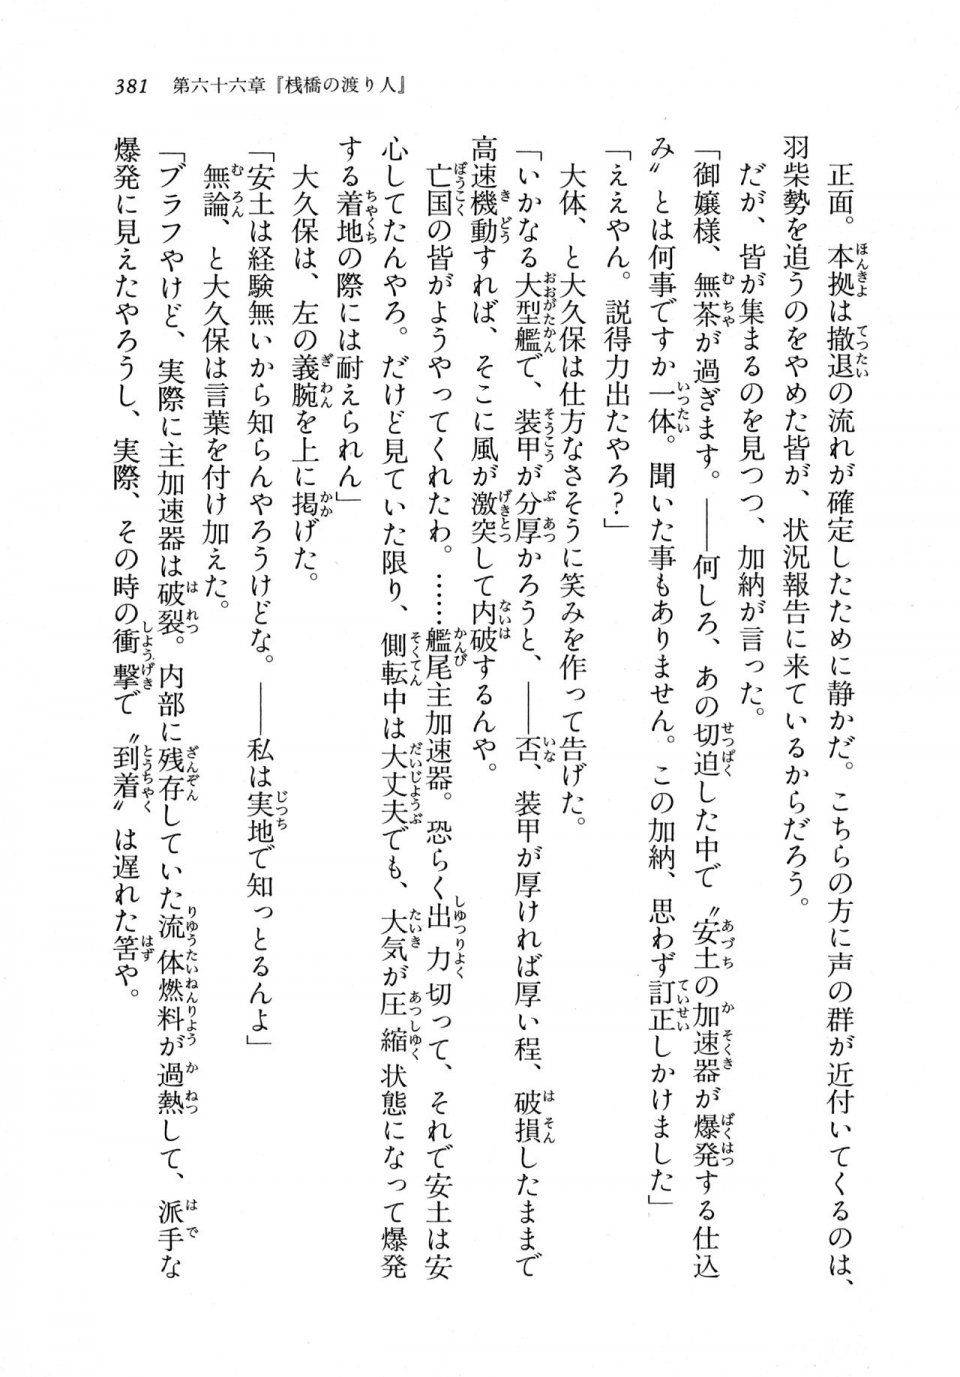 Kyoukai Senjou no Horizon LN Vol 18(7C) Part 1 - Photo #381